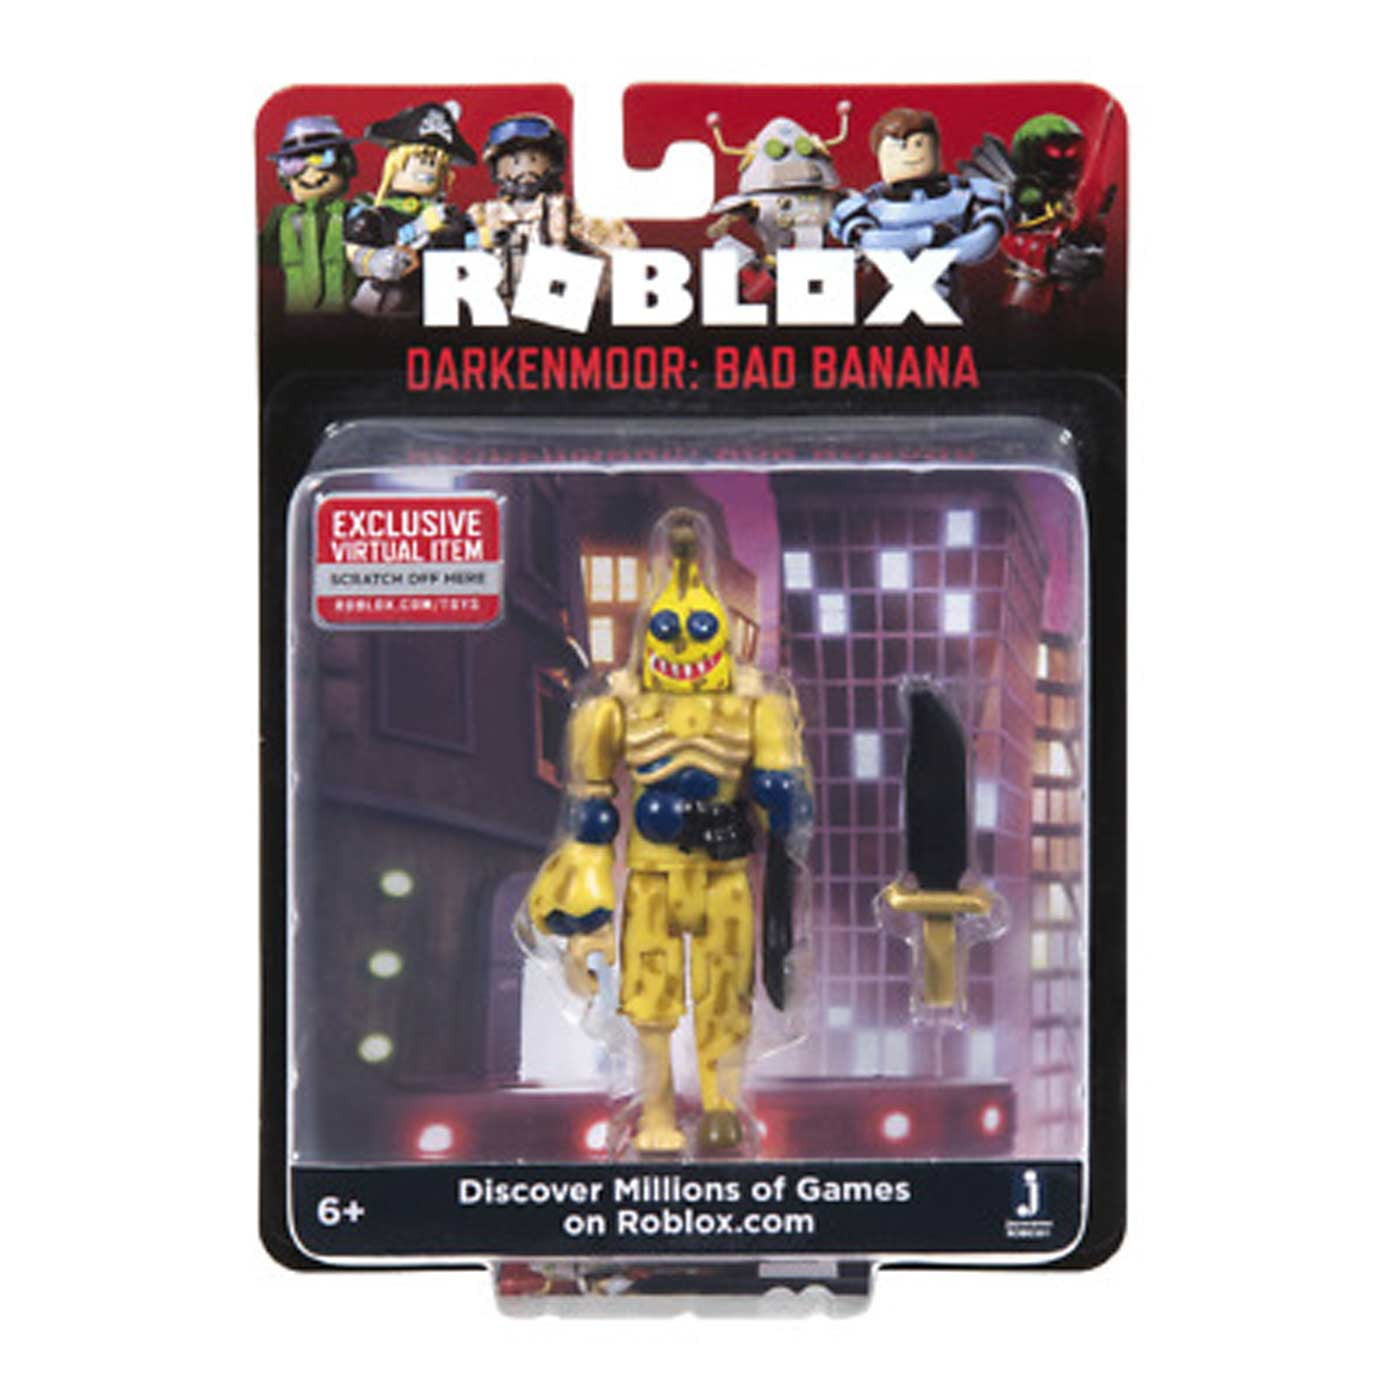 Roblox Action Collection Darkenmoor Bad Banana Figure Pack Includes Exclusive Virtual Item Walmart Com Walmart Com - roblox com toys redeem your virtual code